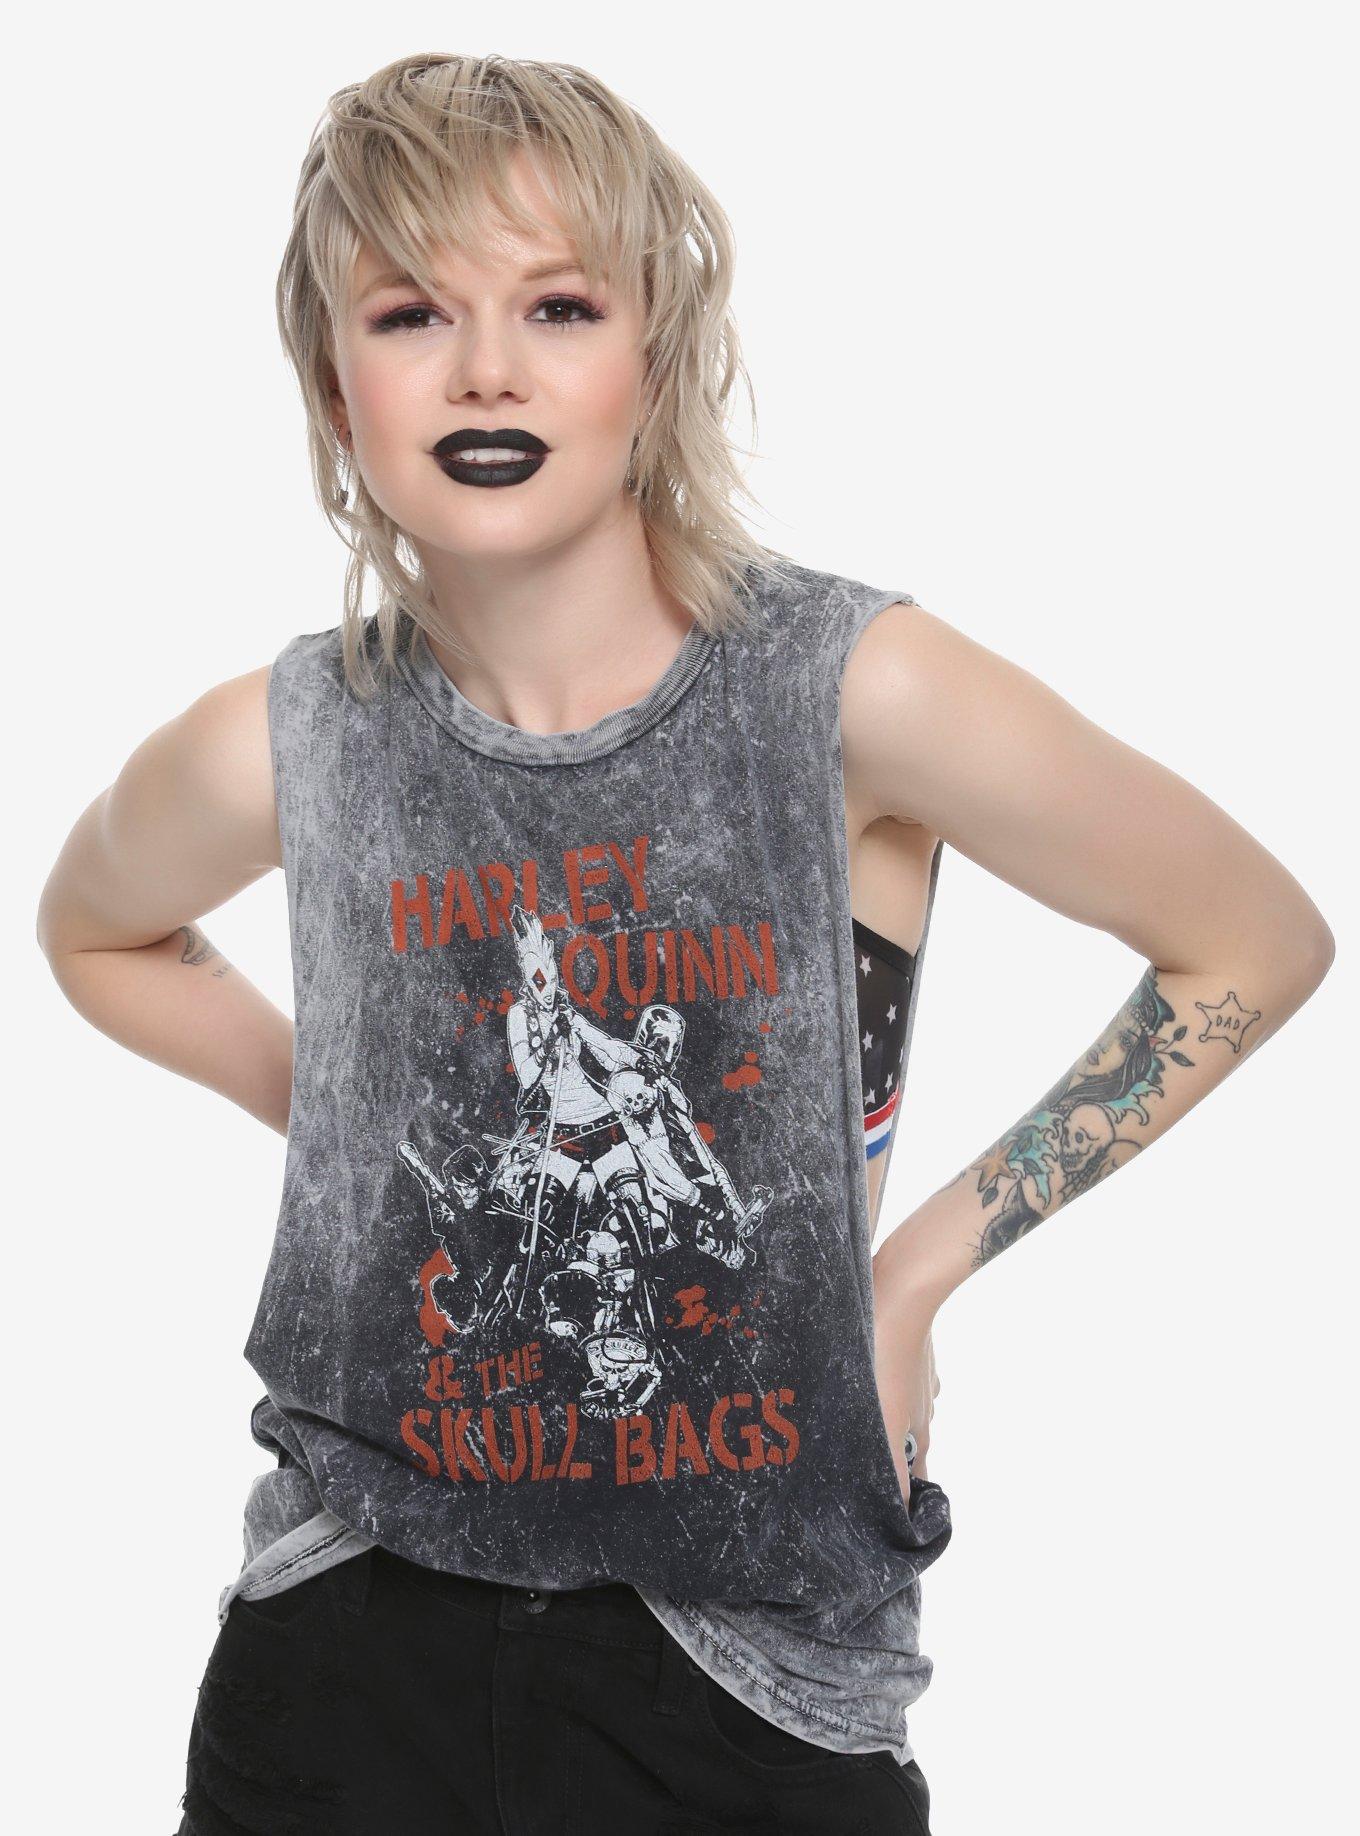 DC Comics Harley Quinn & The Skull Bags Girls Muscle Top | Hot Topic